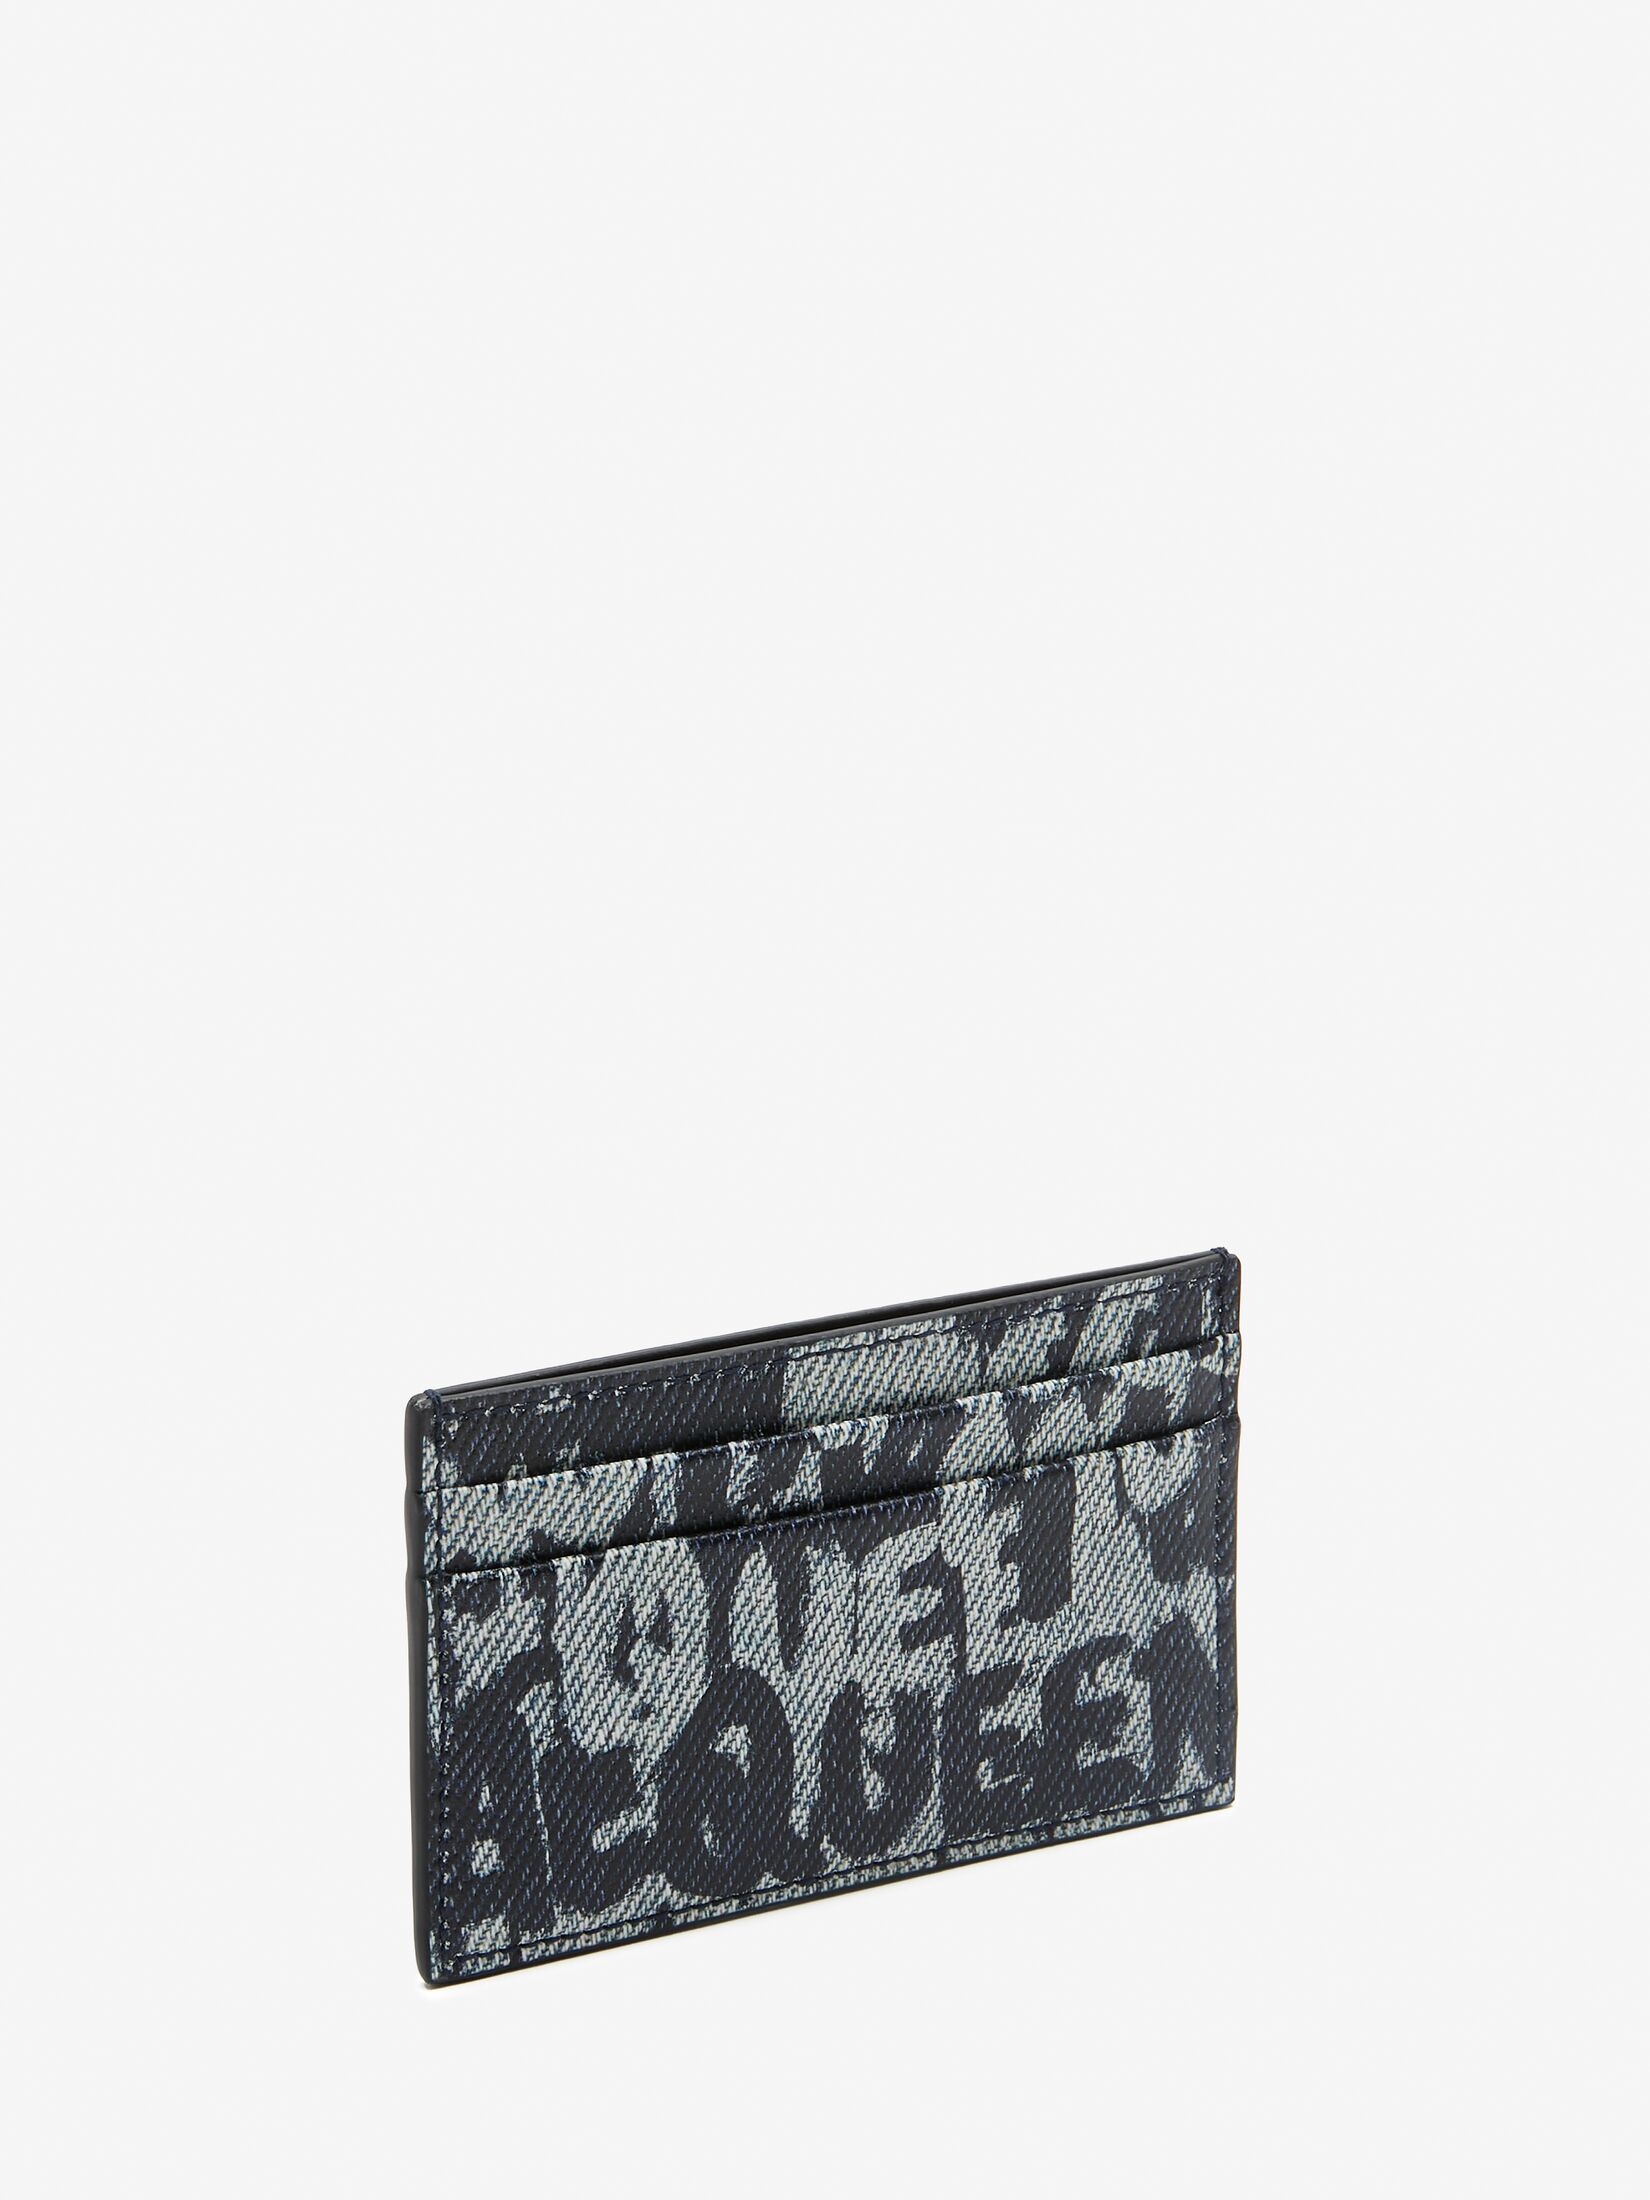 McQueen Graffiti Card Holder